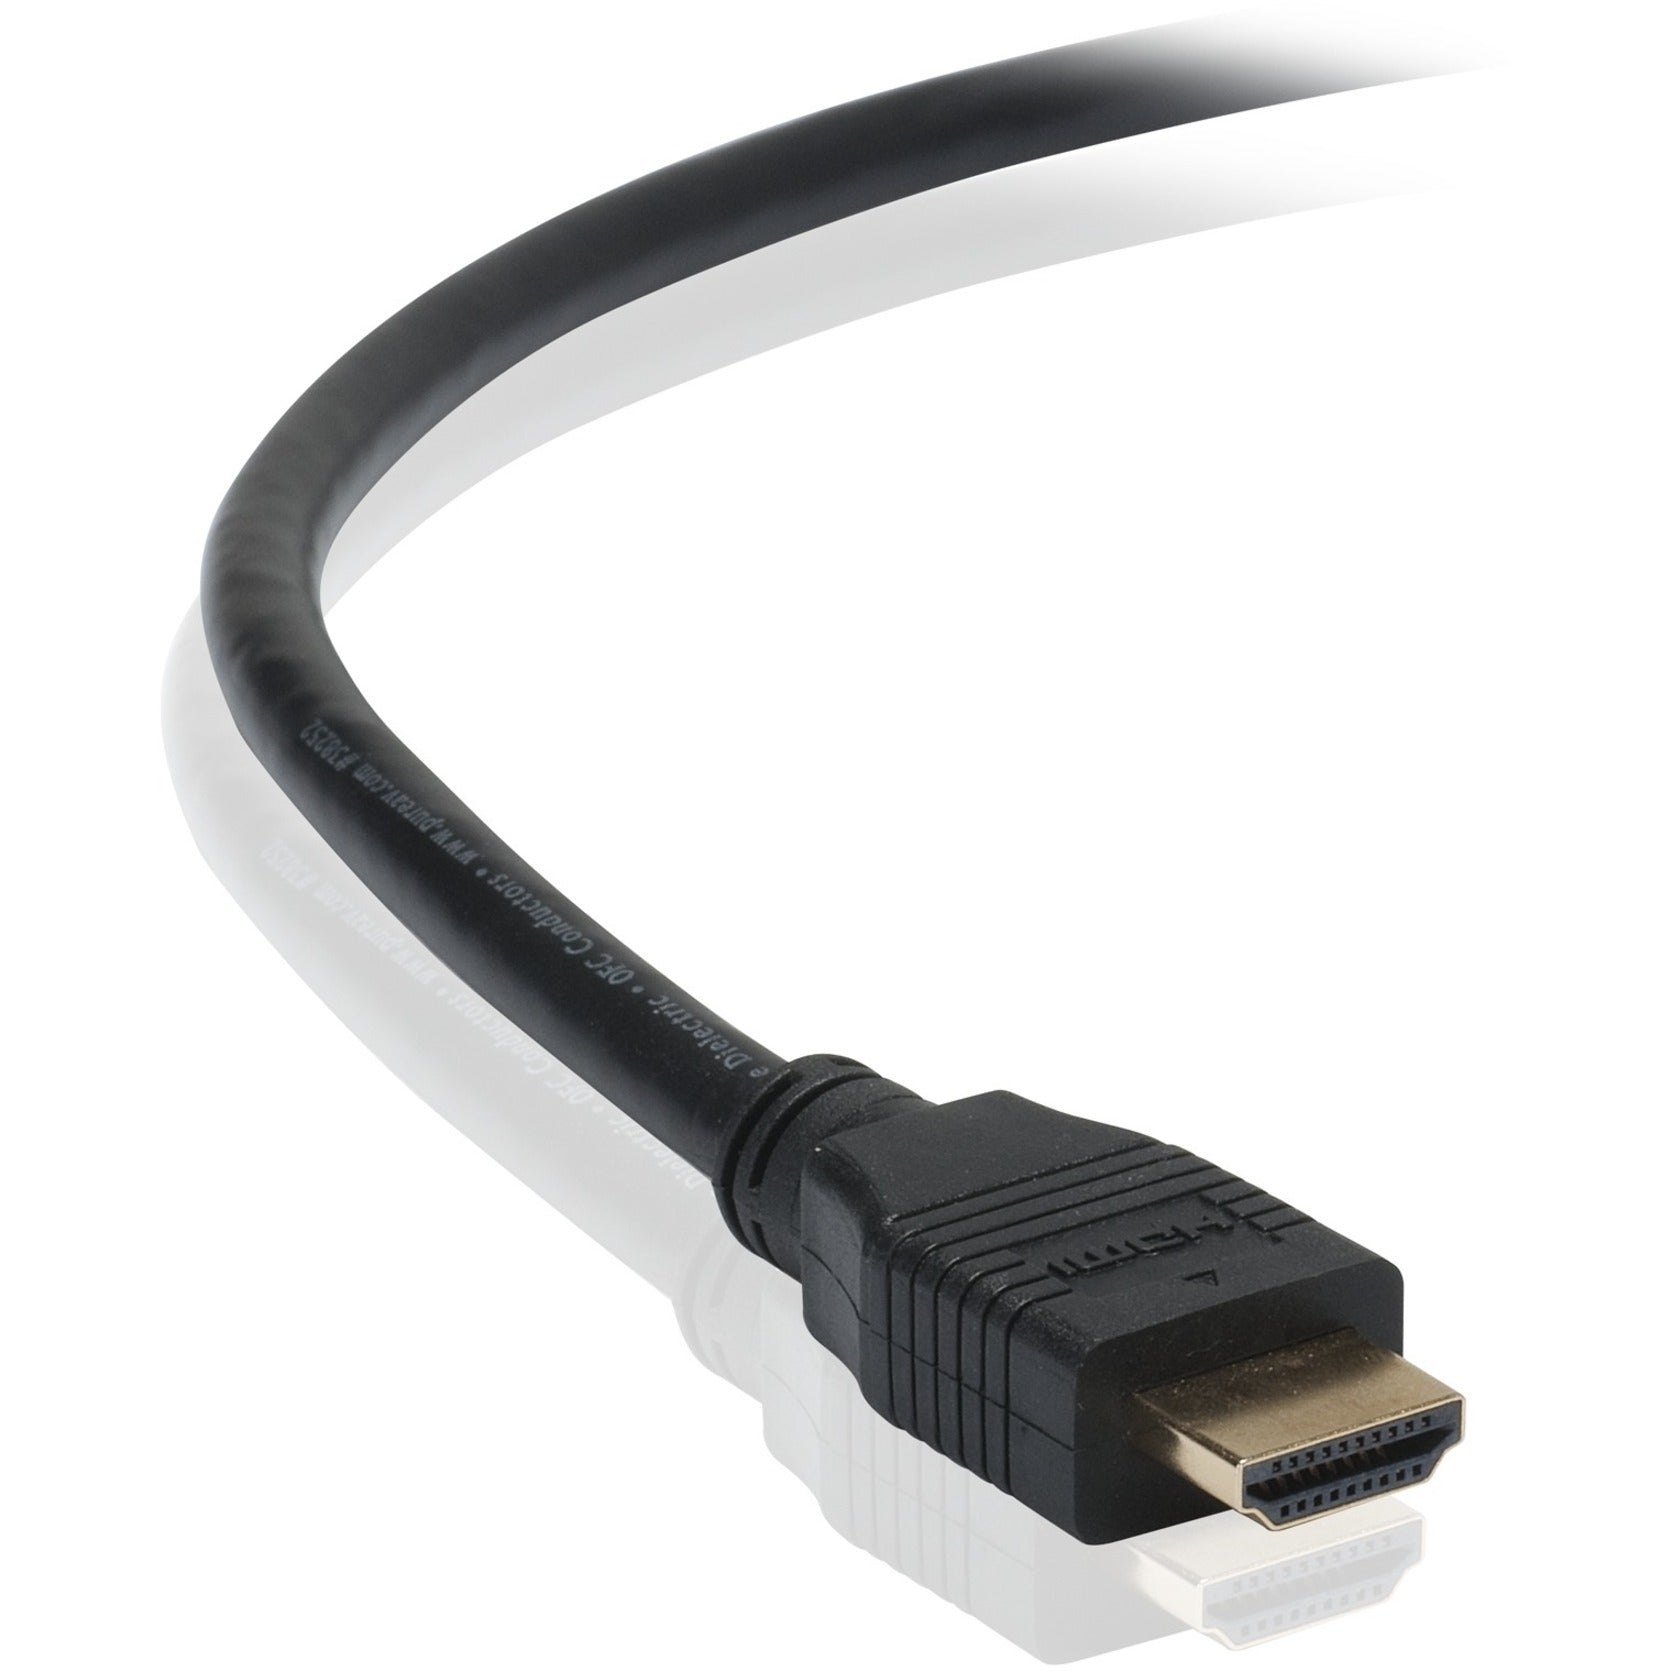 Belkin F8V3311B50 HDMI Cable, 49.87 ft, Copper Conductor, Black